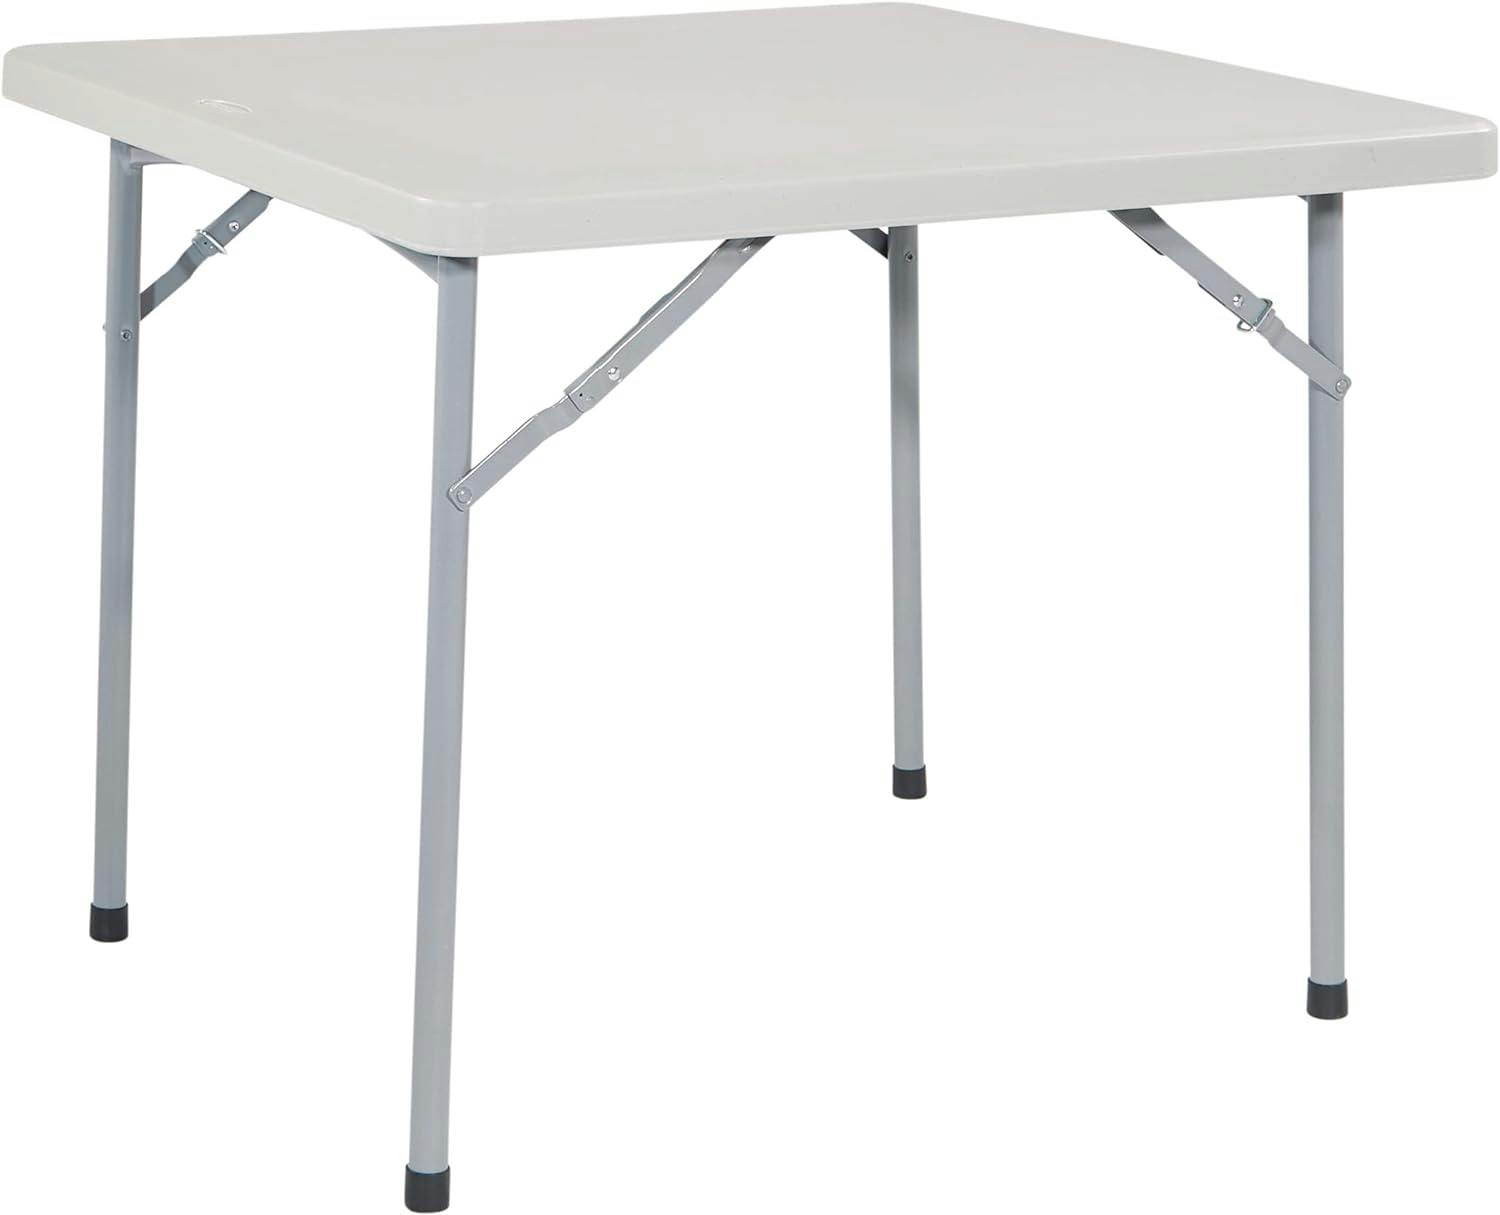 VersaFold 36" Square Light Grey Resin Multipurpose Table